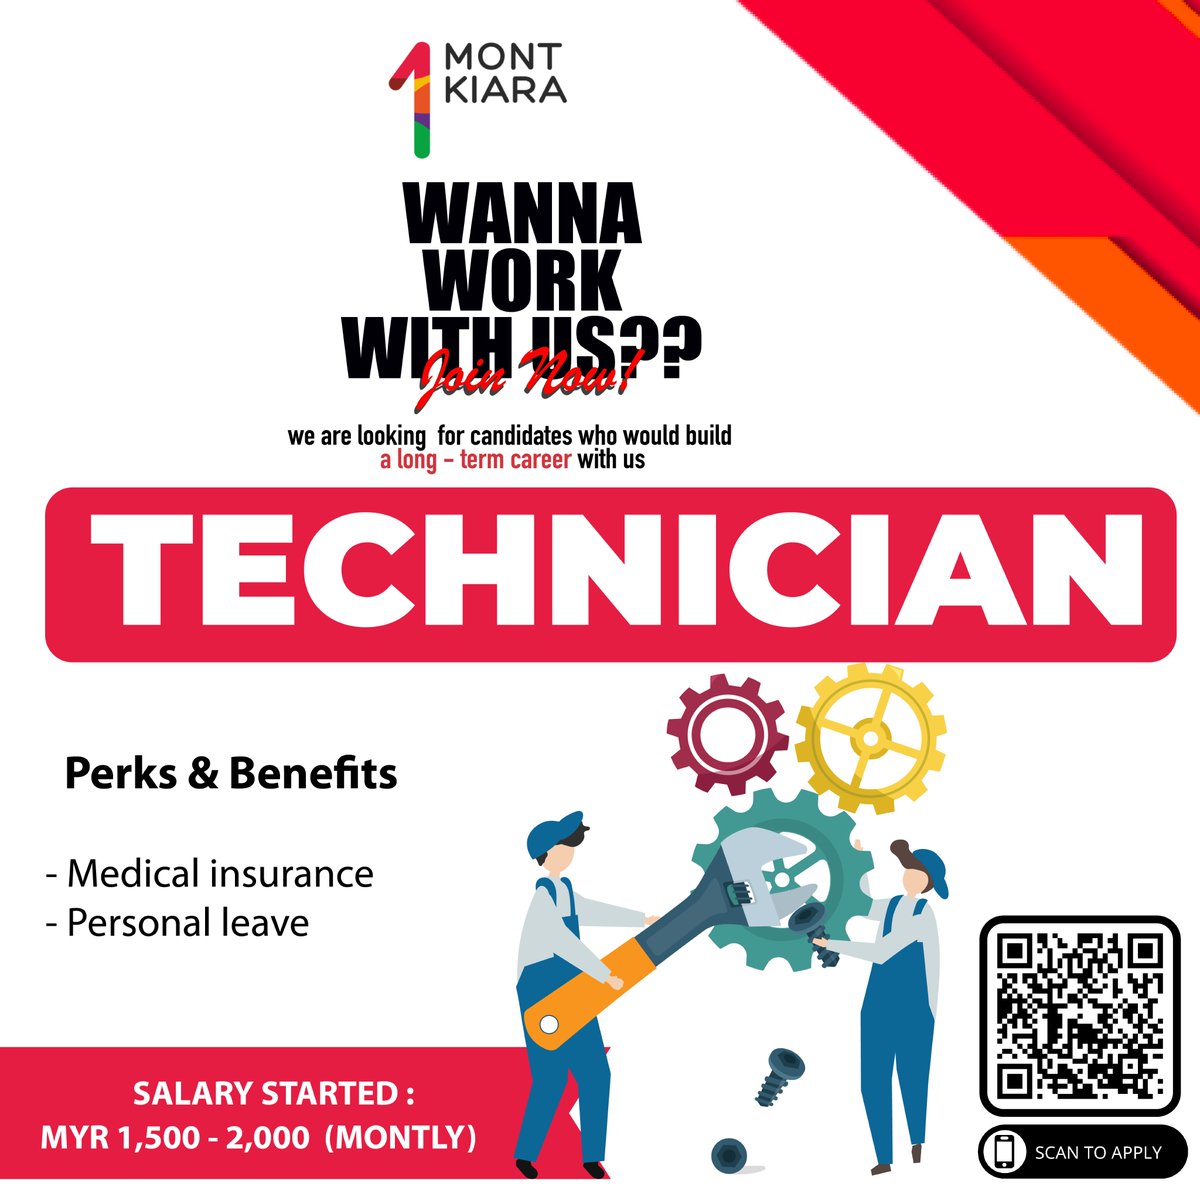 Jawatan kosong,
Kami sedang mencari calon untuk mengisi jawatan di bawah

Syarikat : 1MK Retail Sdn Bhd
Tempat : Kuala Lumpur

1) Technician

lnkd.in/g5Q6K27Q

Join our channel telegram for more job! 
t.me/myjobstore

#hiringnow
#work
#jobseekers